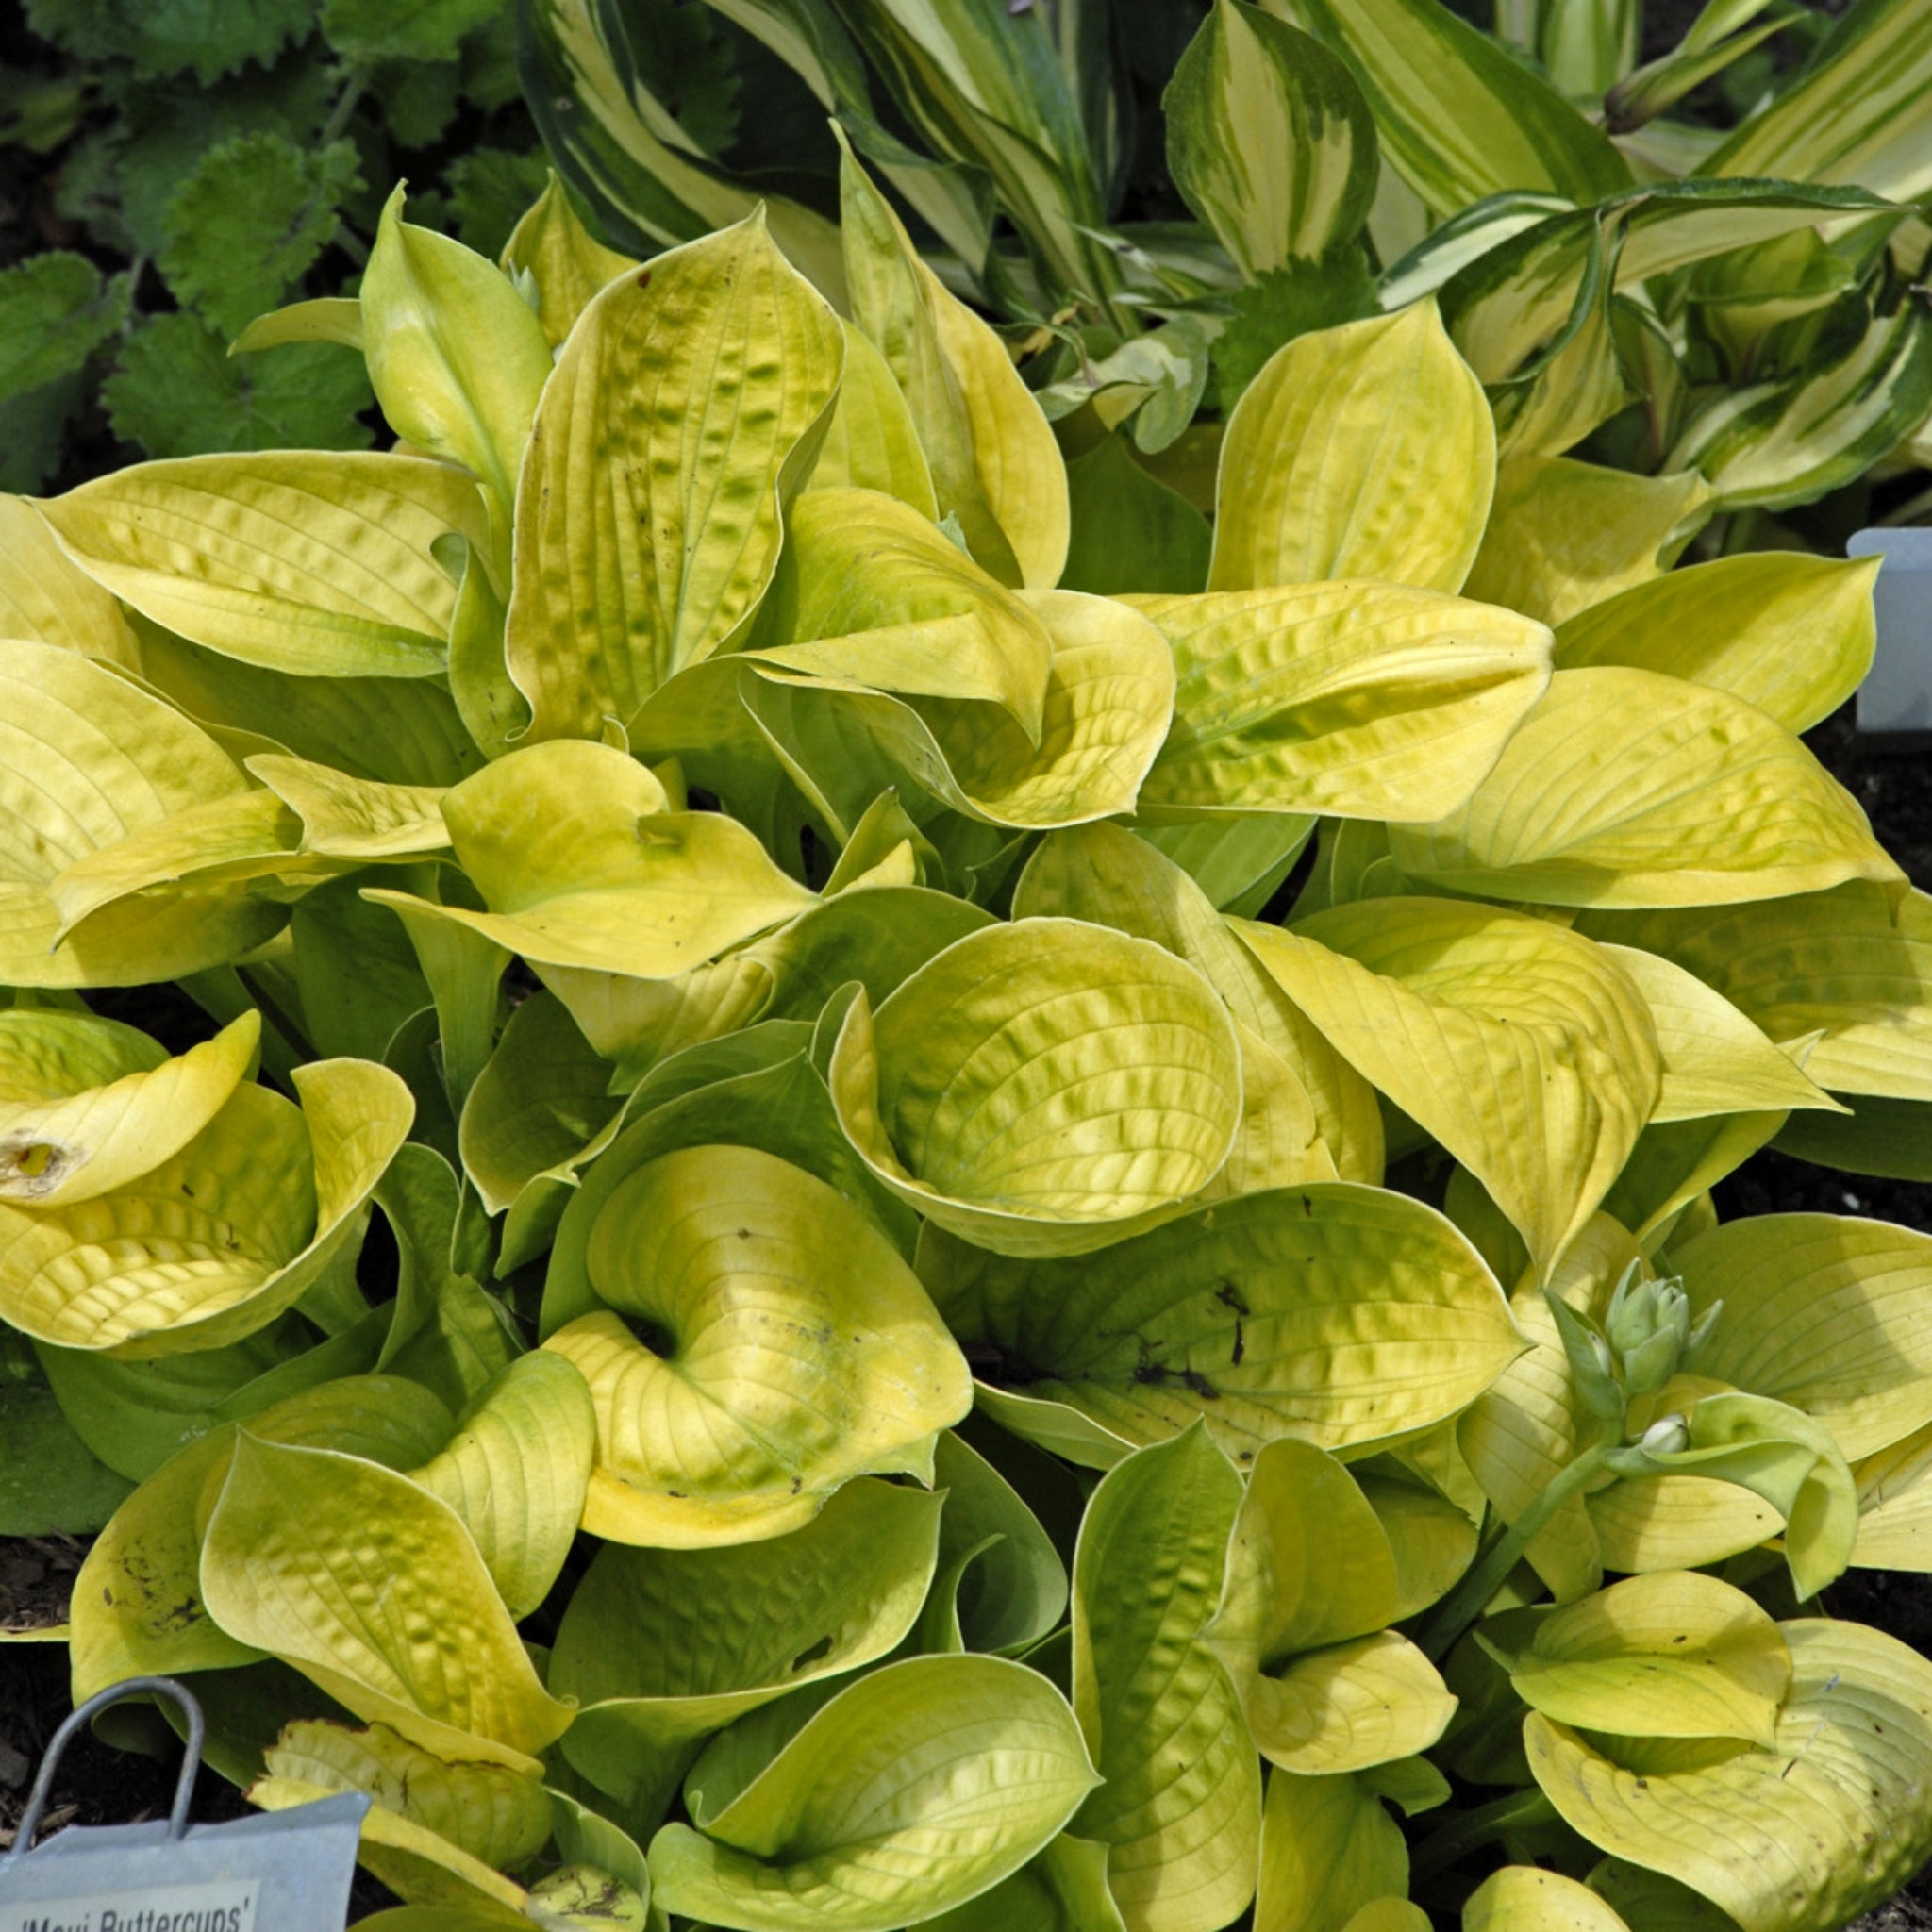 Maui Buttercups Hosta - Shade NH Hostas Hosta Perennial Sun – Plant Tolerant